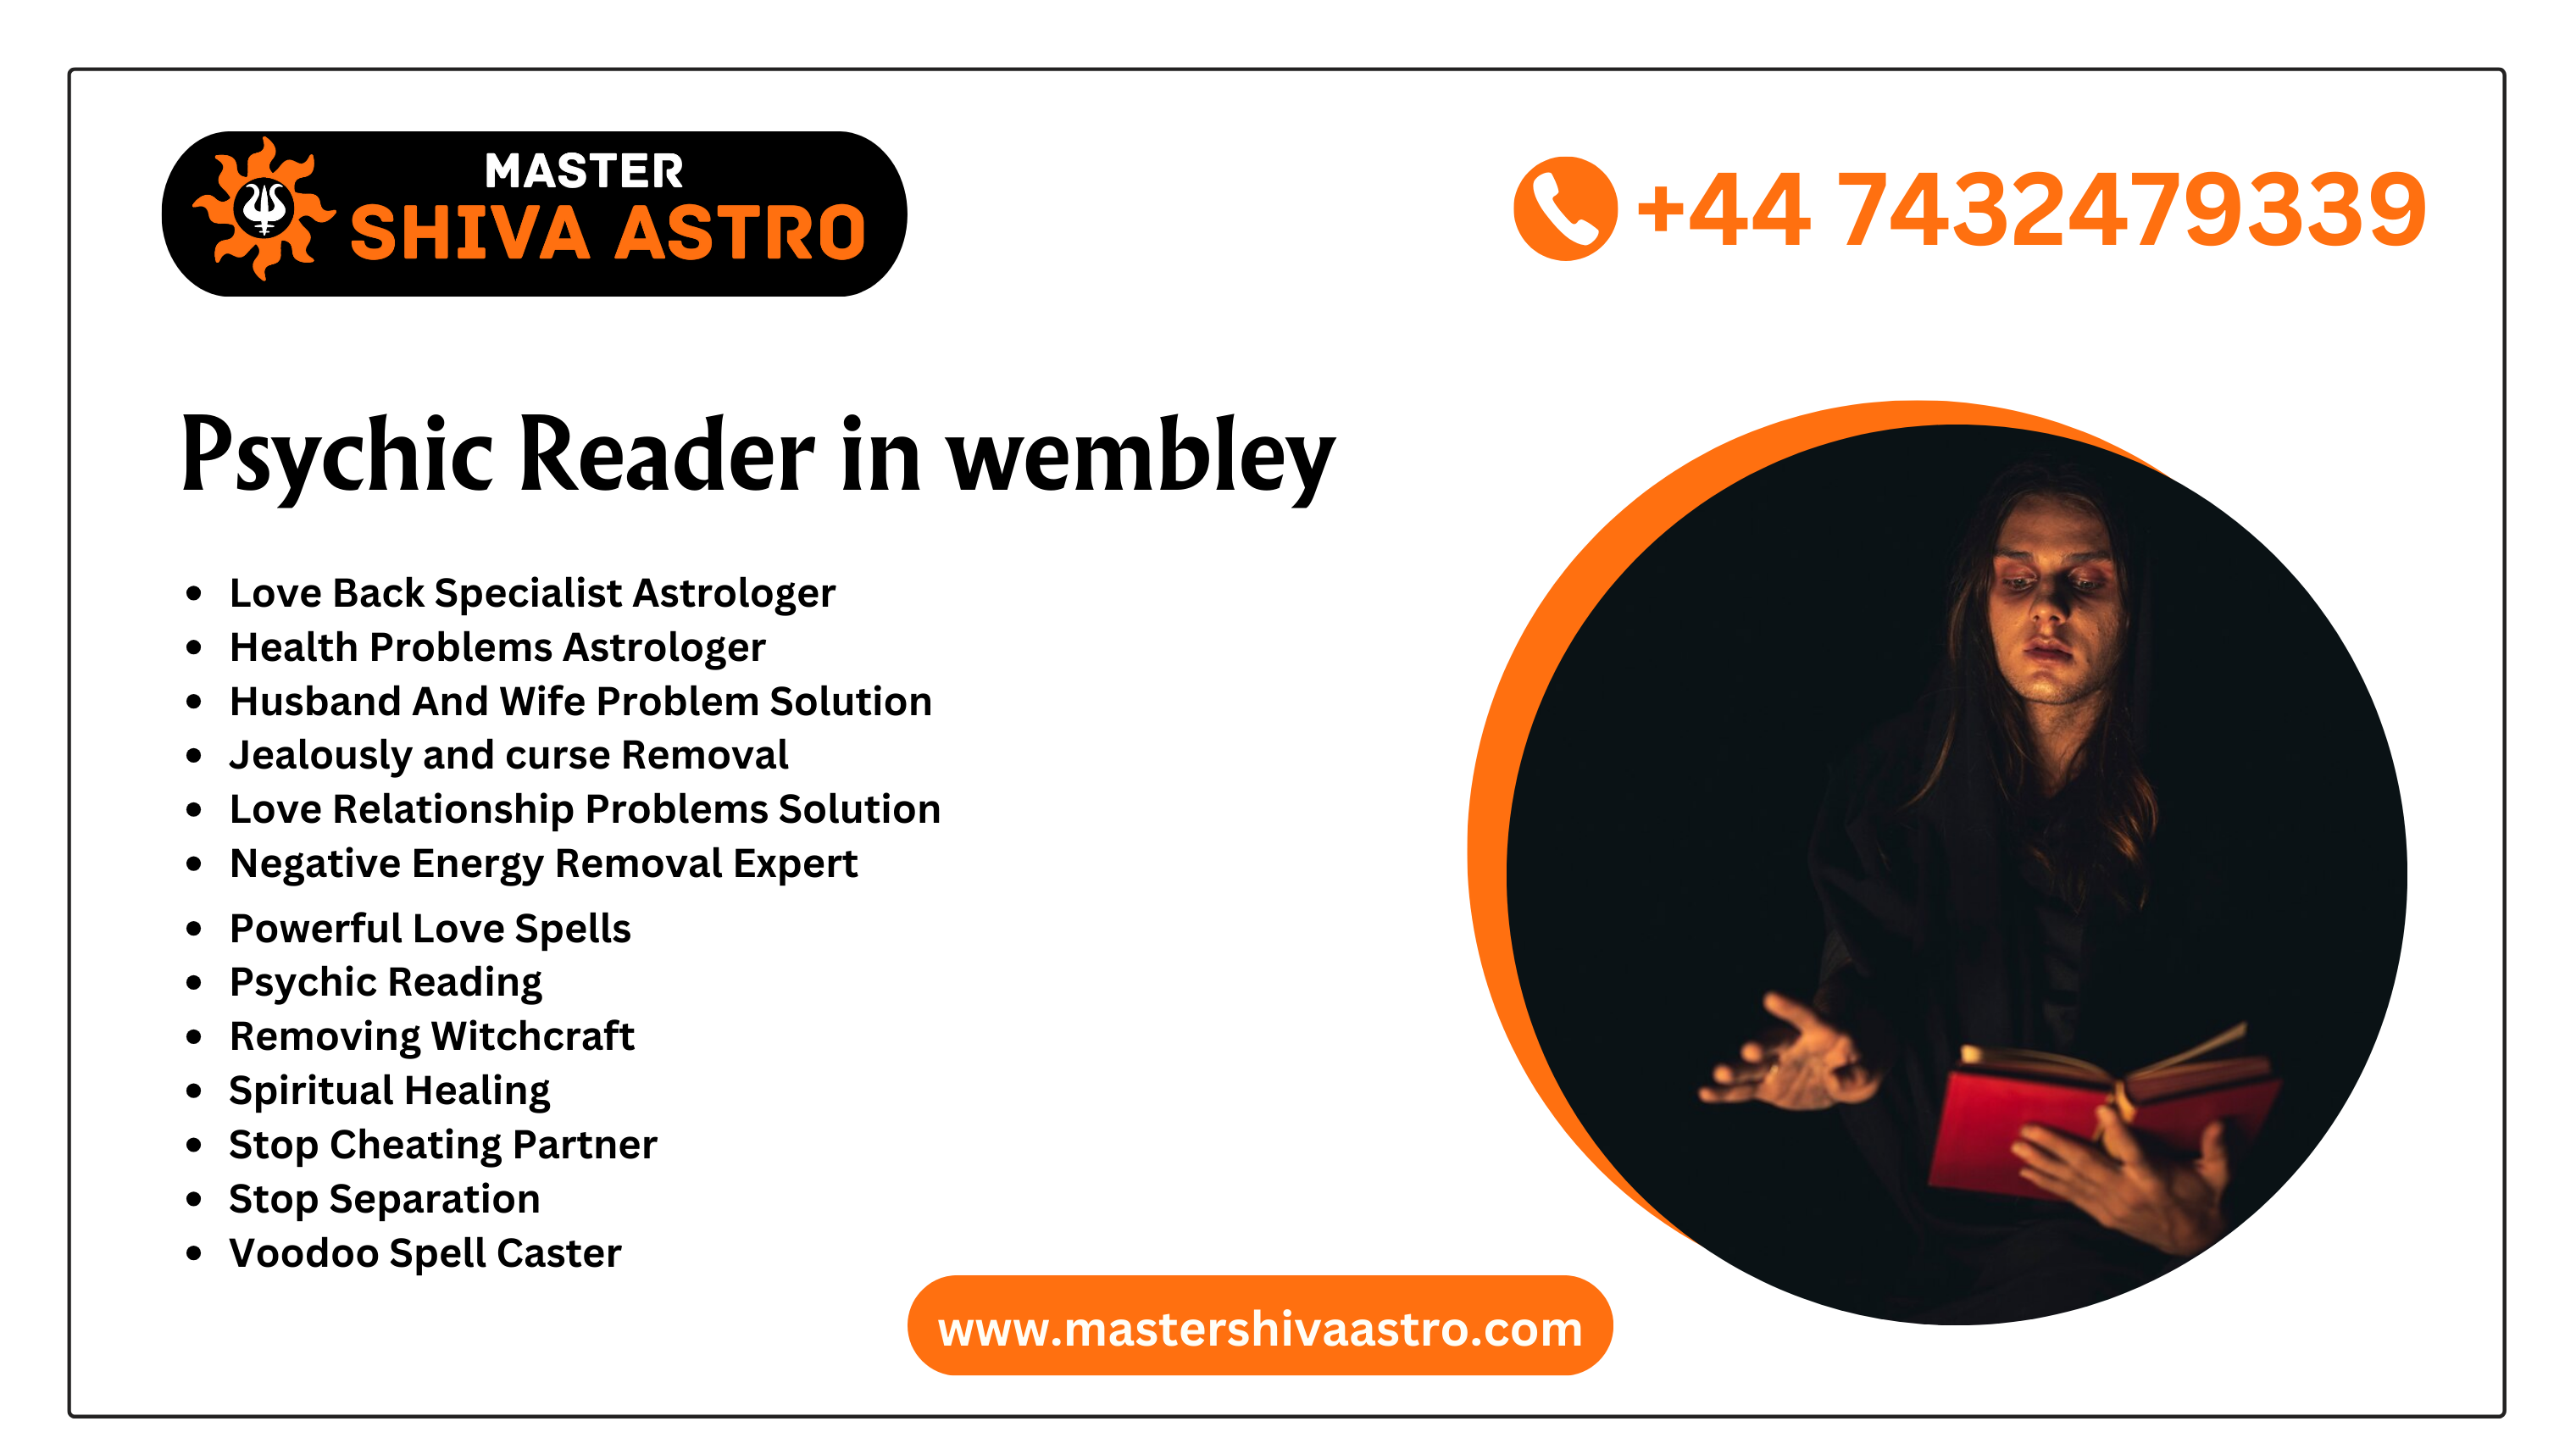 Psychic Reader in Wembley - Master Shiva